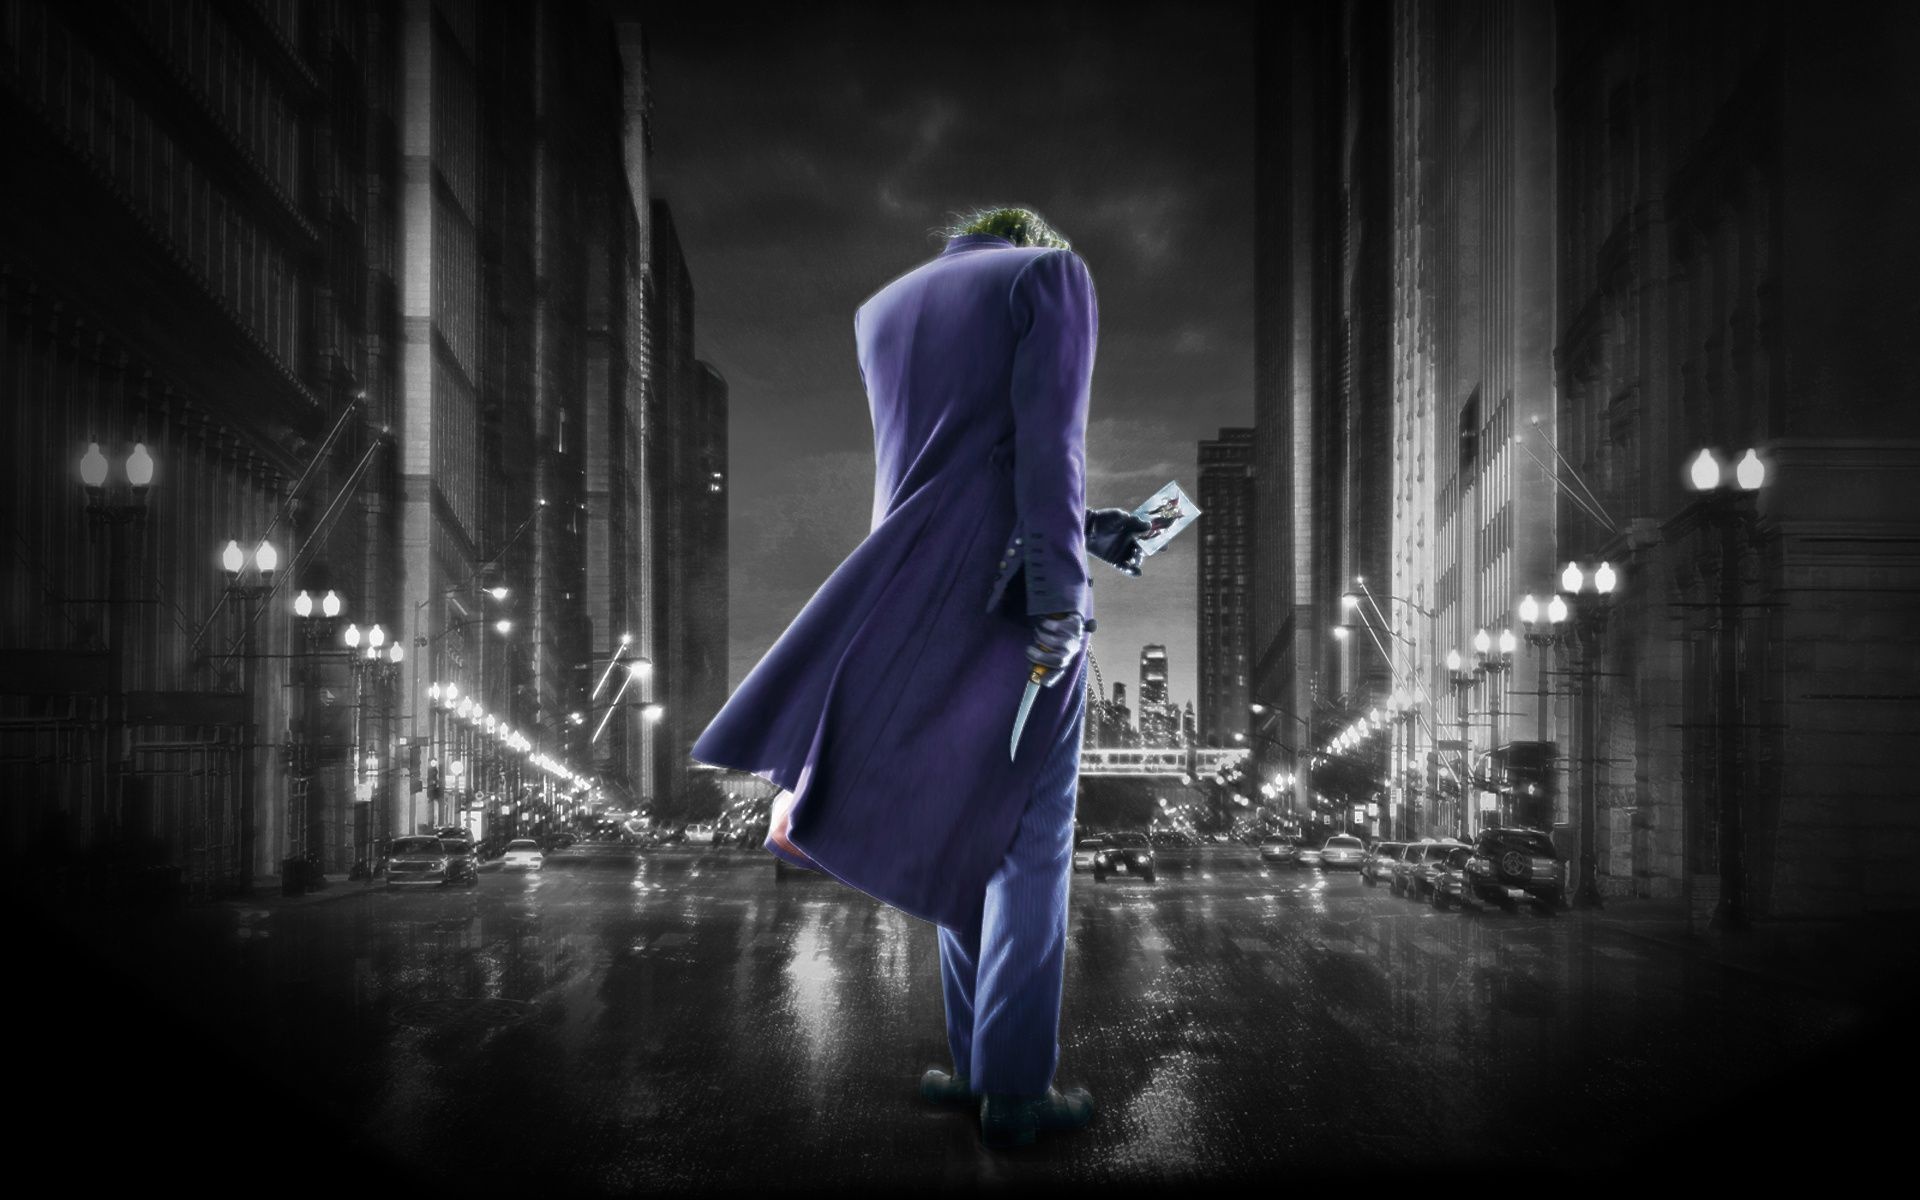 Gotham City movies, High-resolution images, Joker's sinister presence, Artistic wallpapers, 1920x1200 HD Desktop